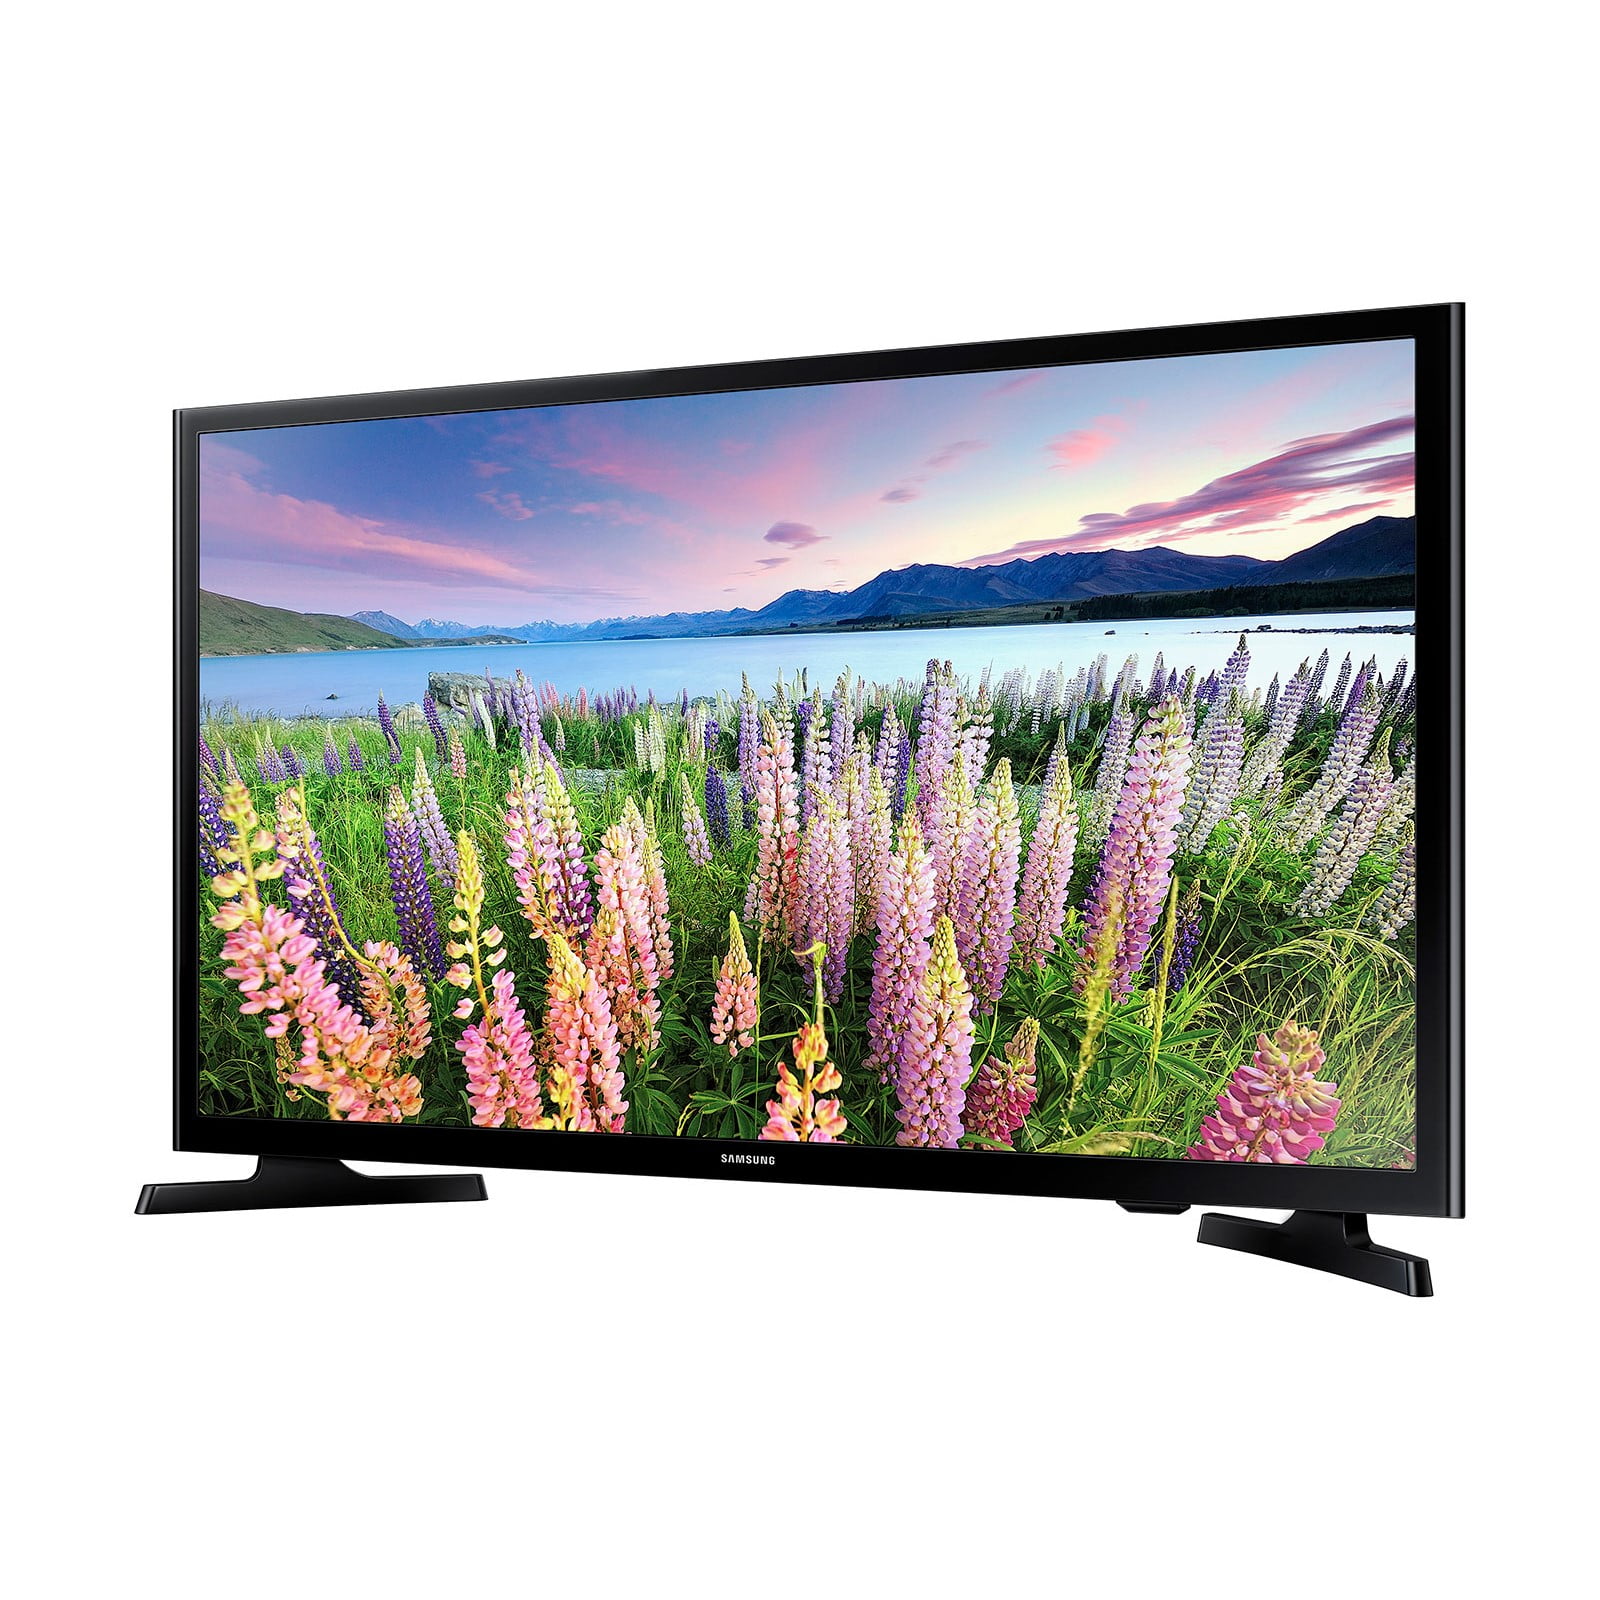 Smart Tv Samsung Ue40n5300 40 Full Hd Led Wifi con Ofertas en Carrefour